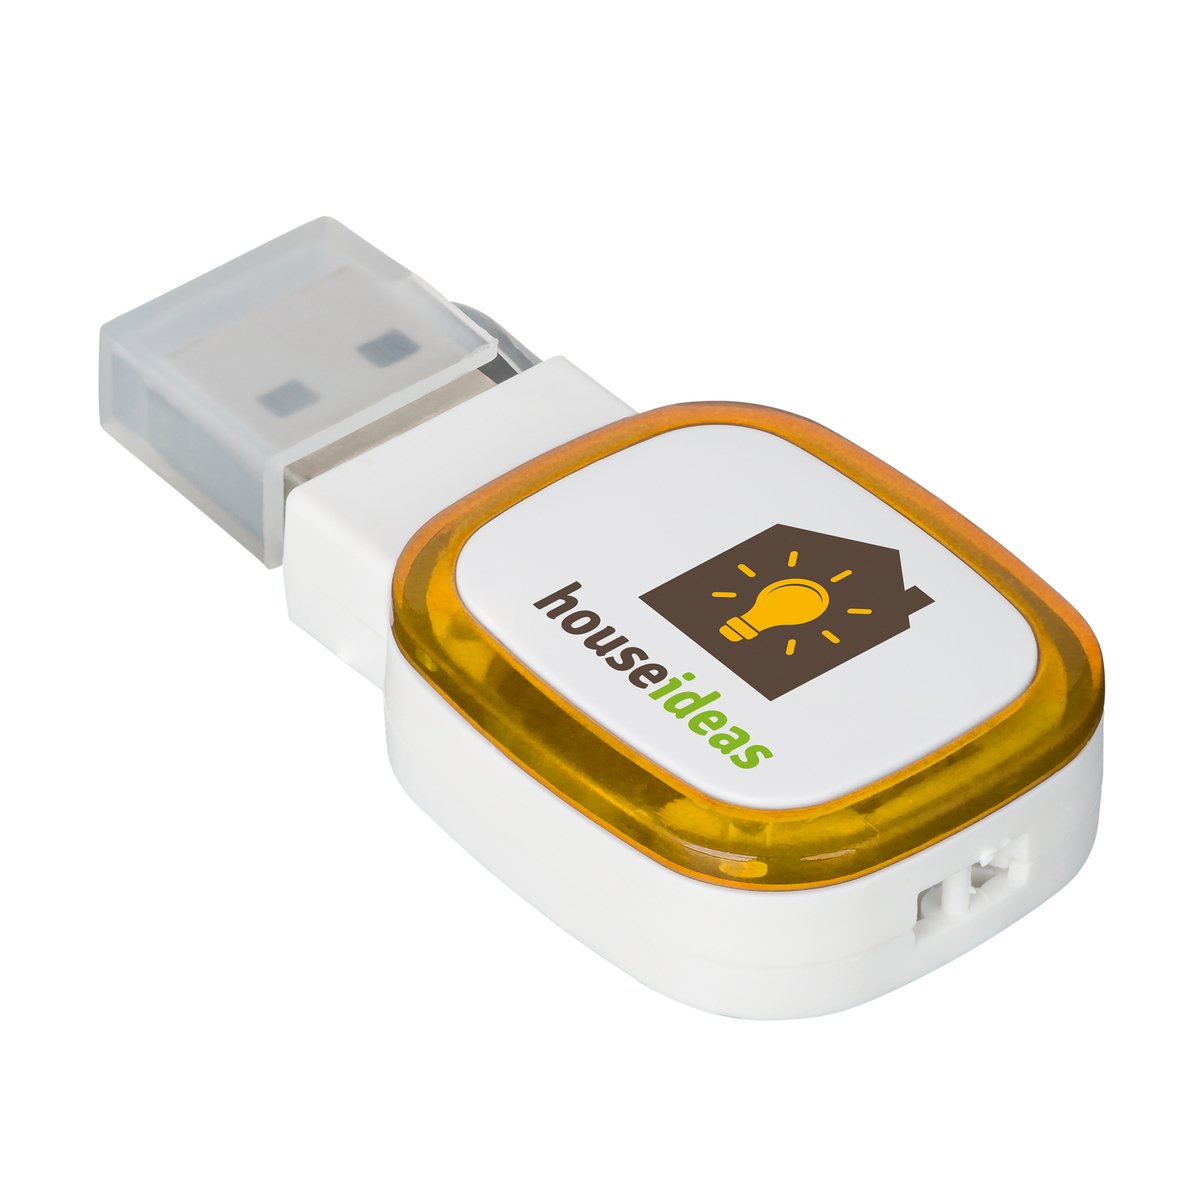 USB Flash Drive COLLECTION 500 orange 16GB